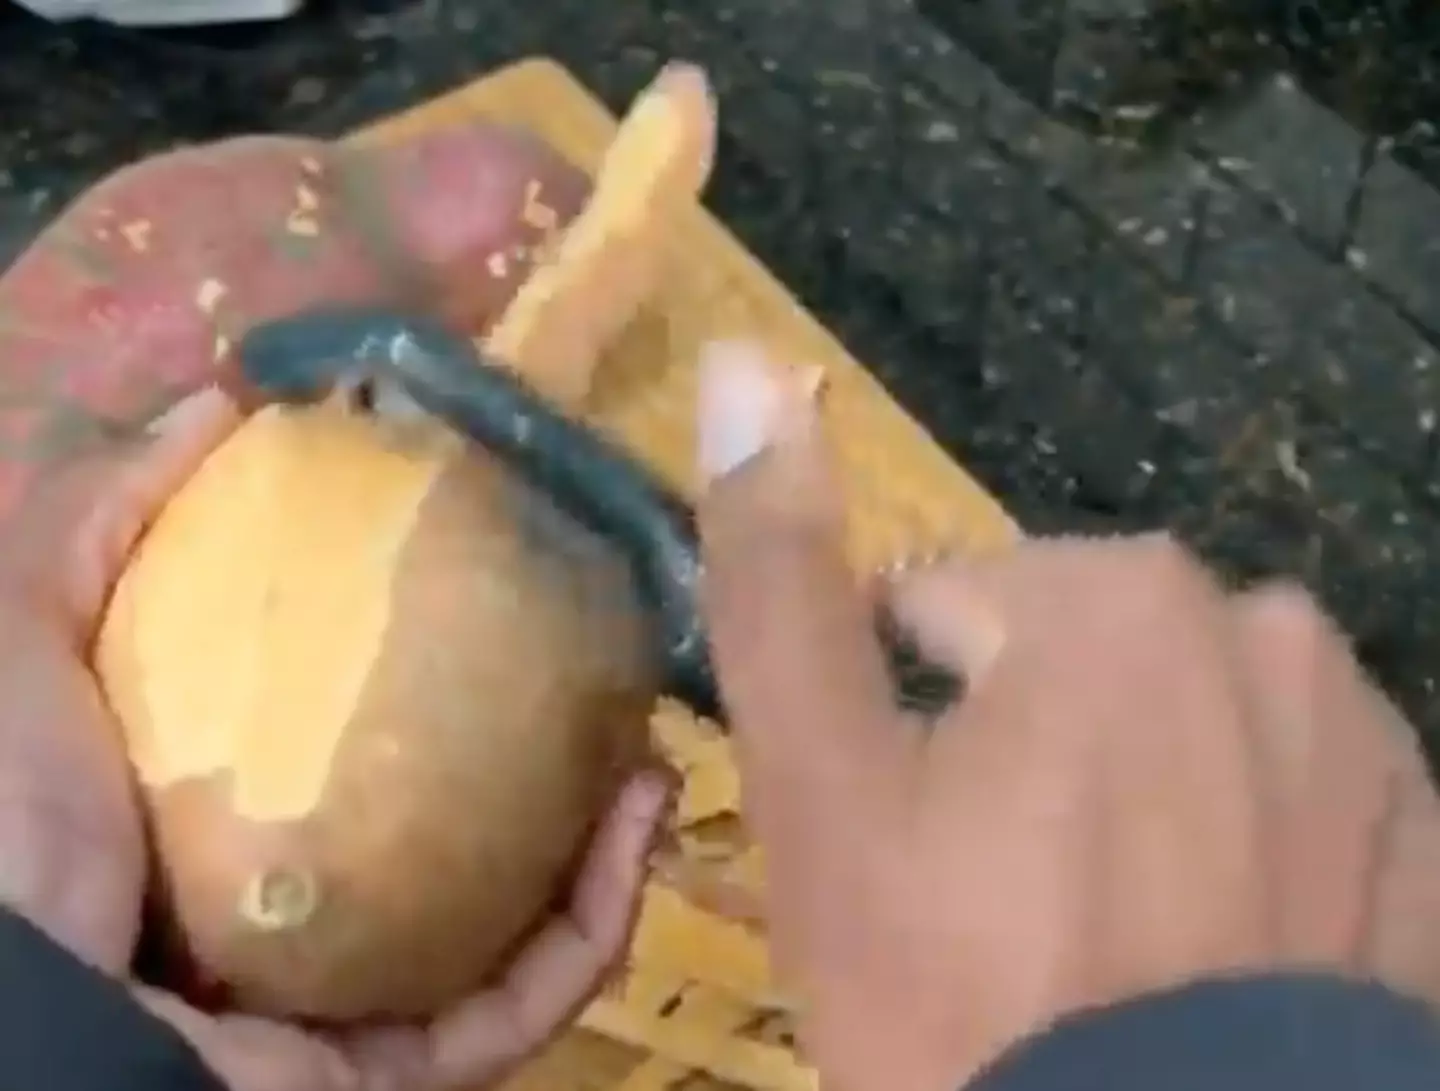 Jenni showed viewers how she peels potatoes.